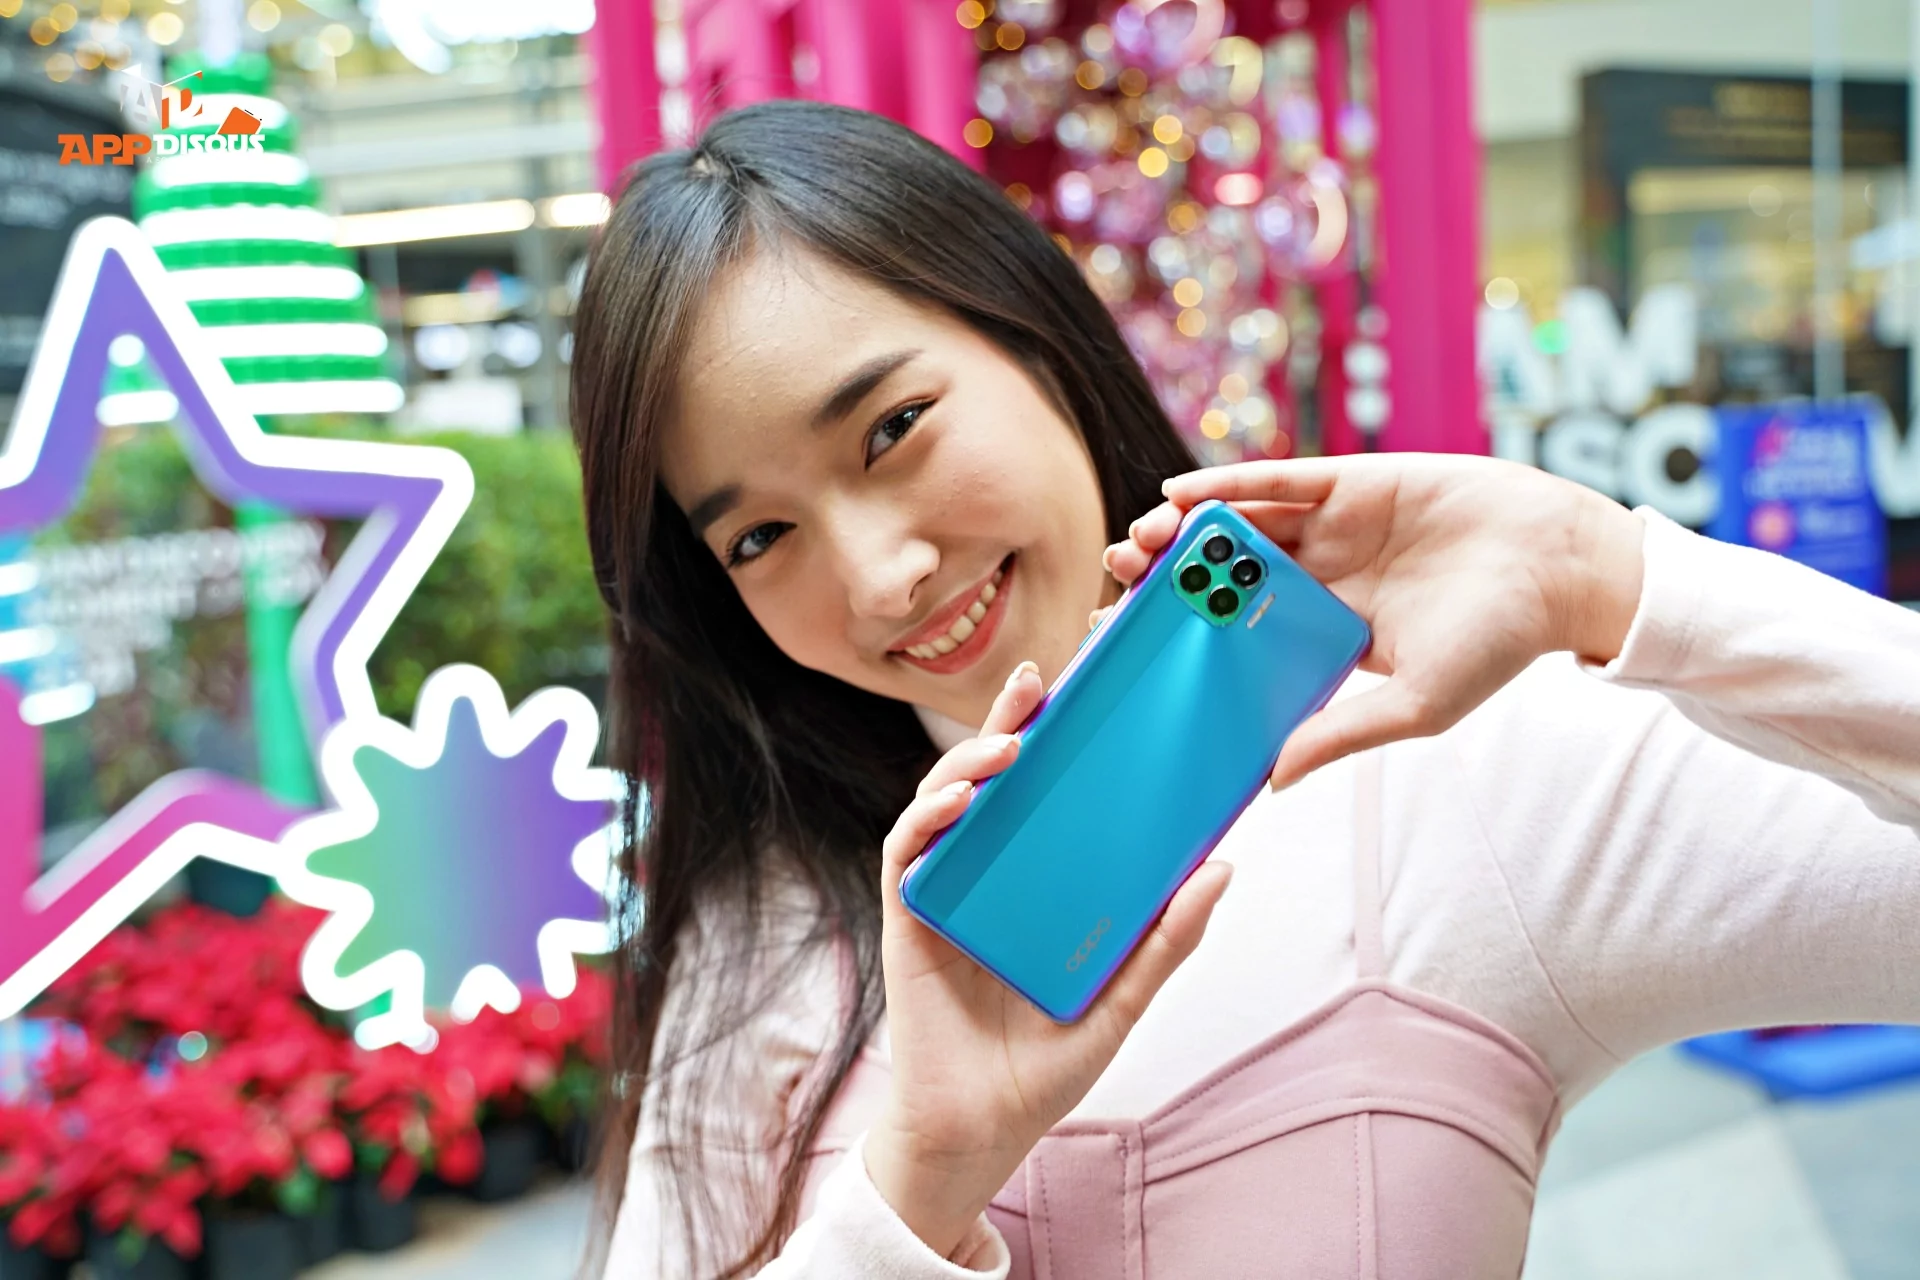 OPPO A93 Magic Blue 5 | A93 | OPPO A93 สีใหม่! Magic Blue สมาร์ทโฟนดีไซน์สวย เล่นสนุก พร้อมของแถมช่วงปีใหม่ คุ้มสุด!